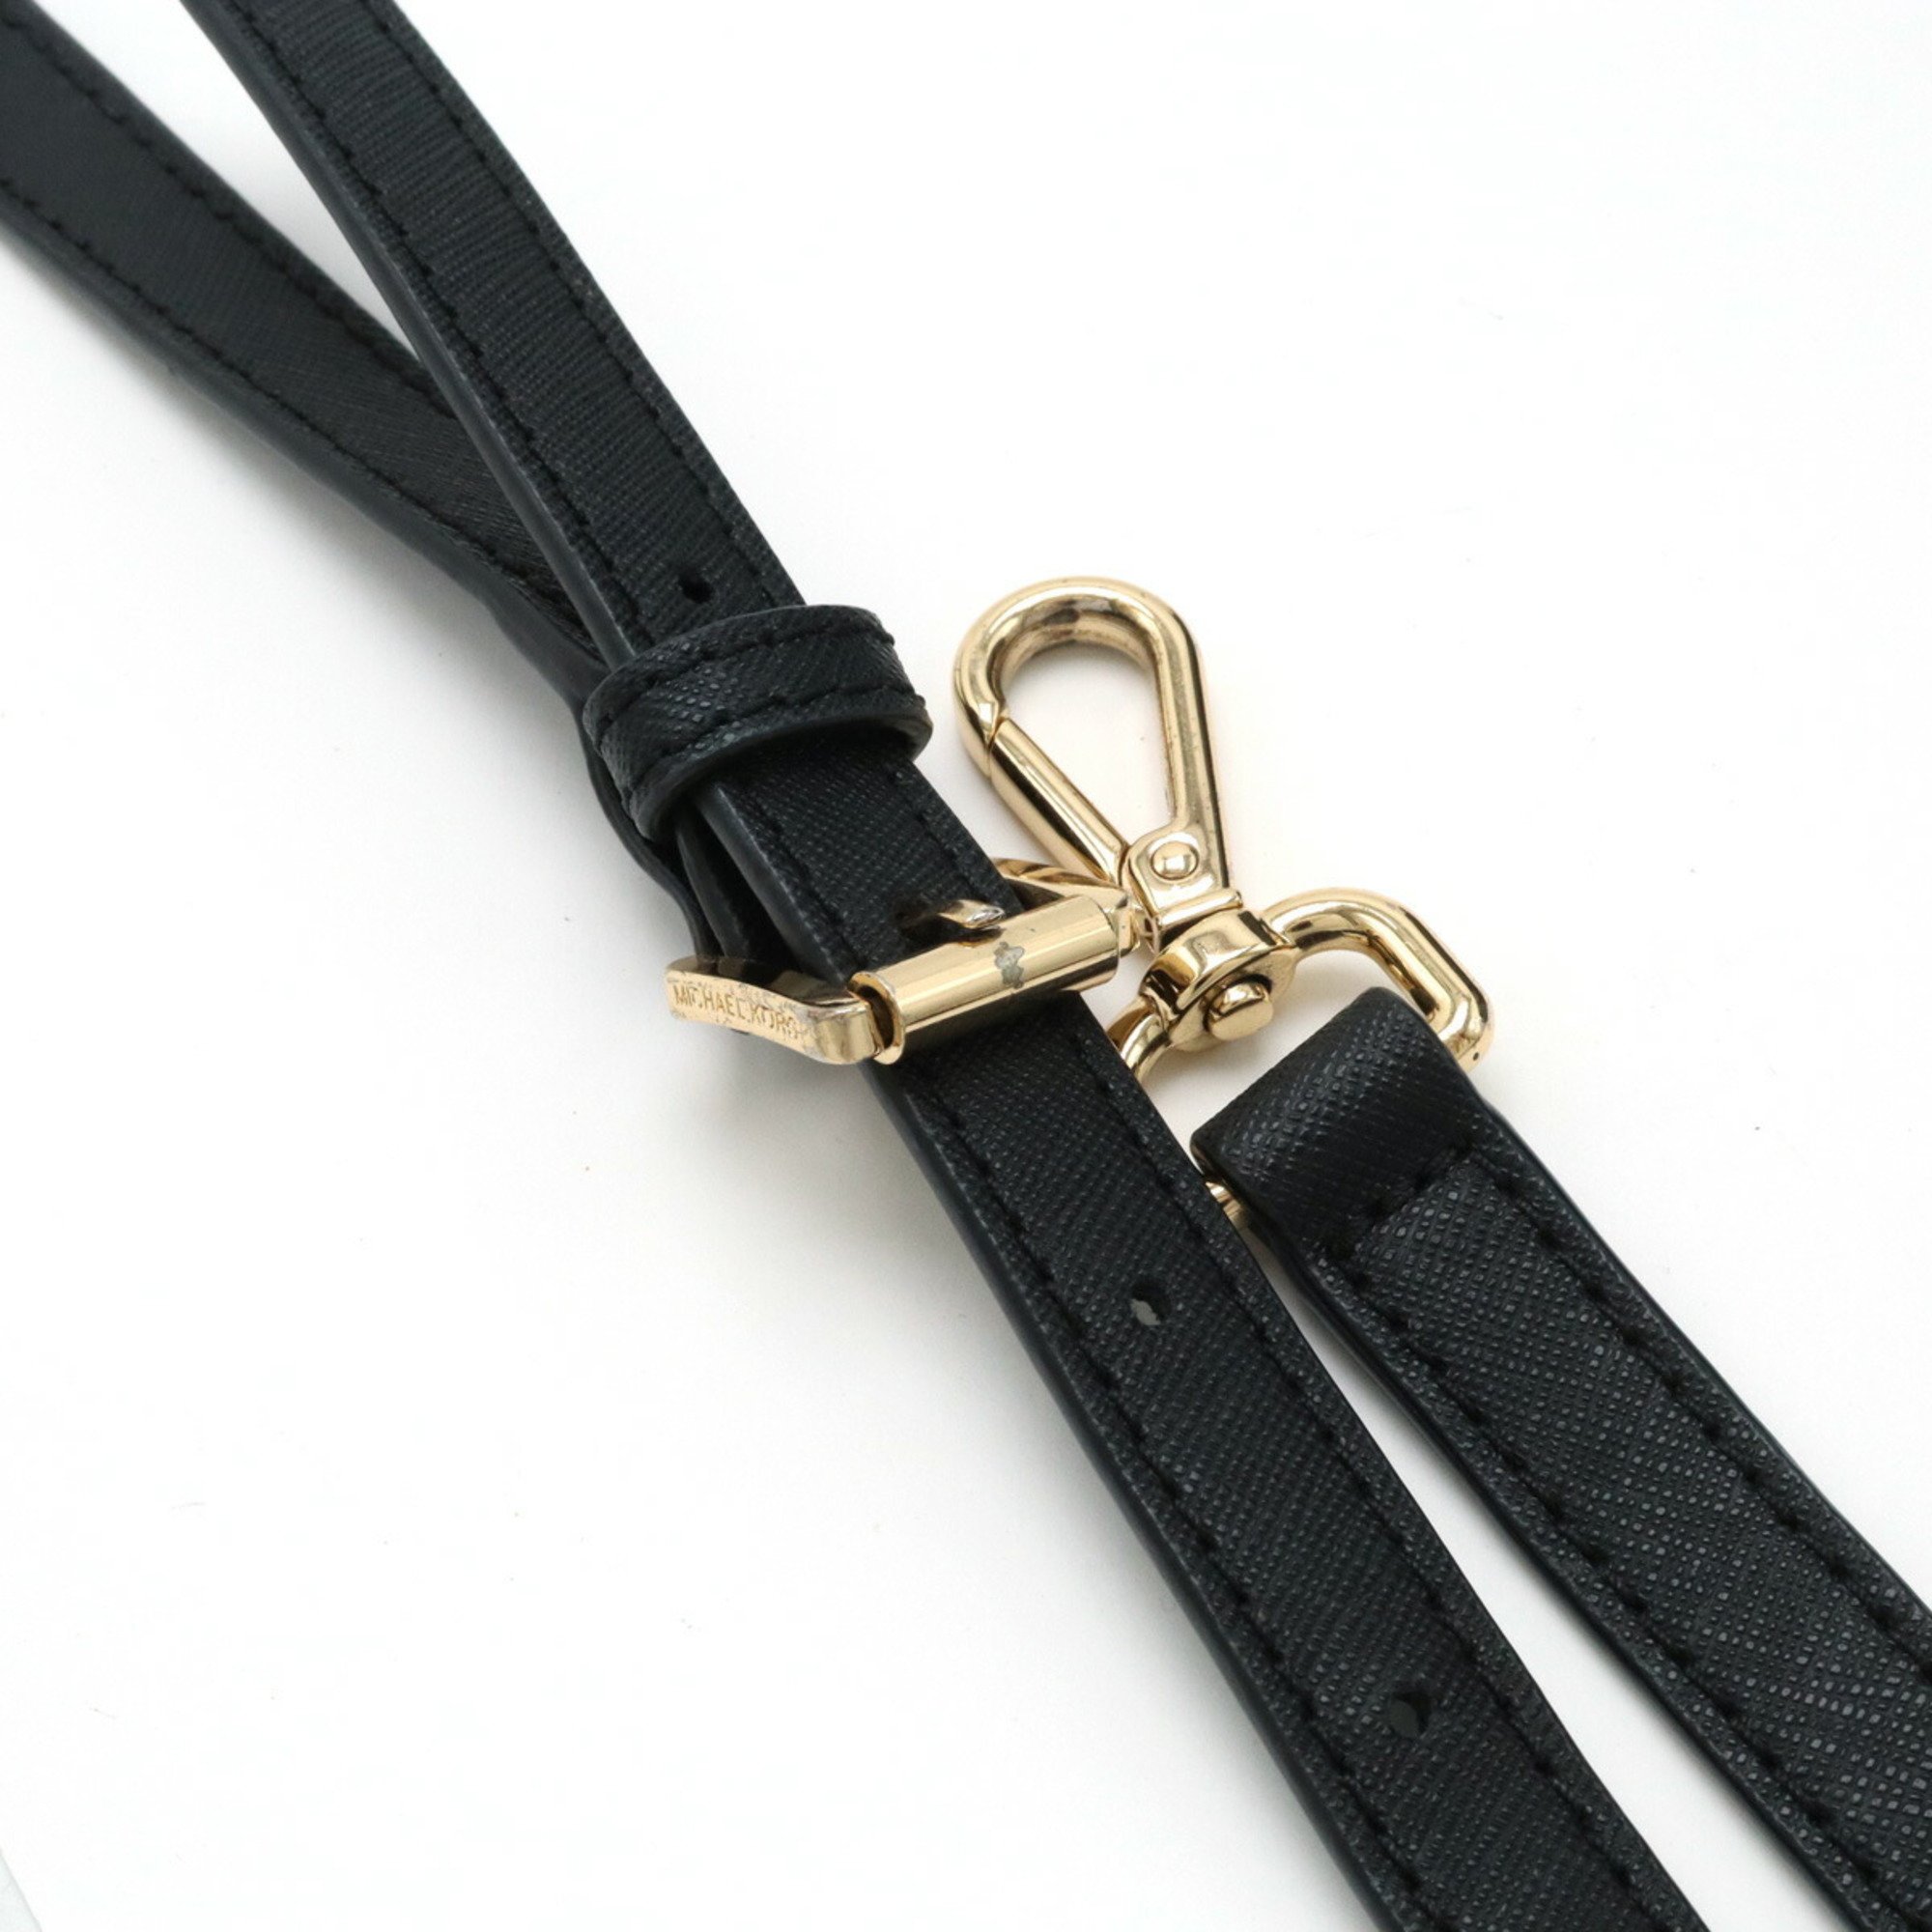 MICHAEL KORS Michael Kors Selma handbag shoulder bag leather black